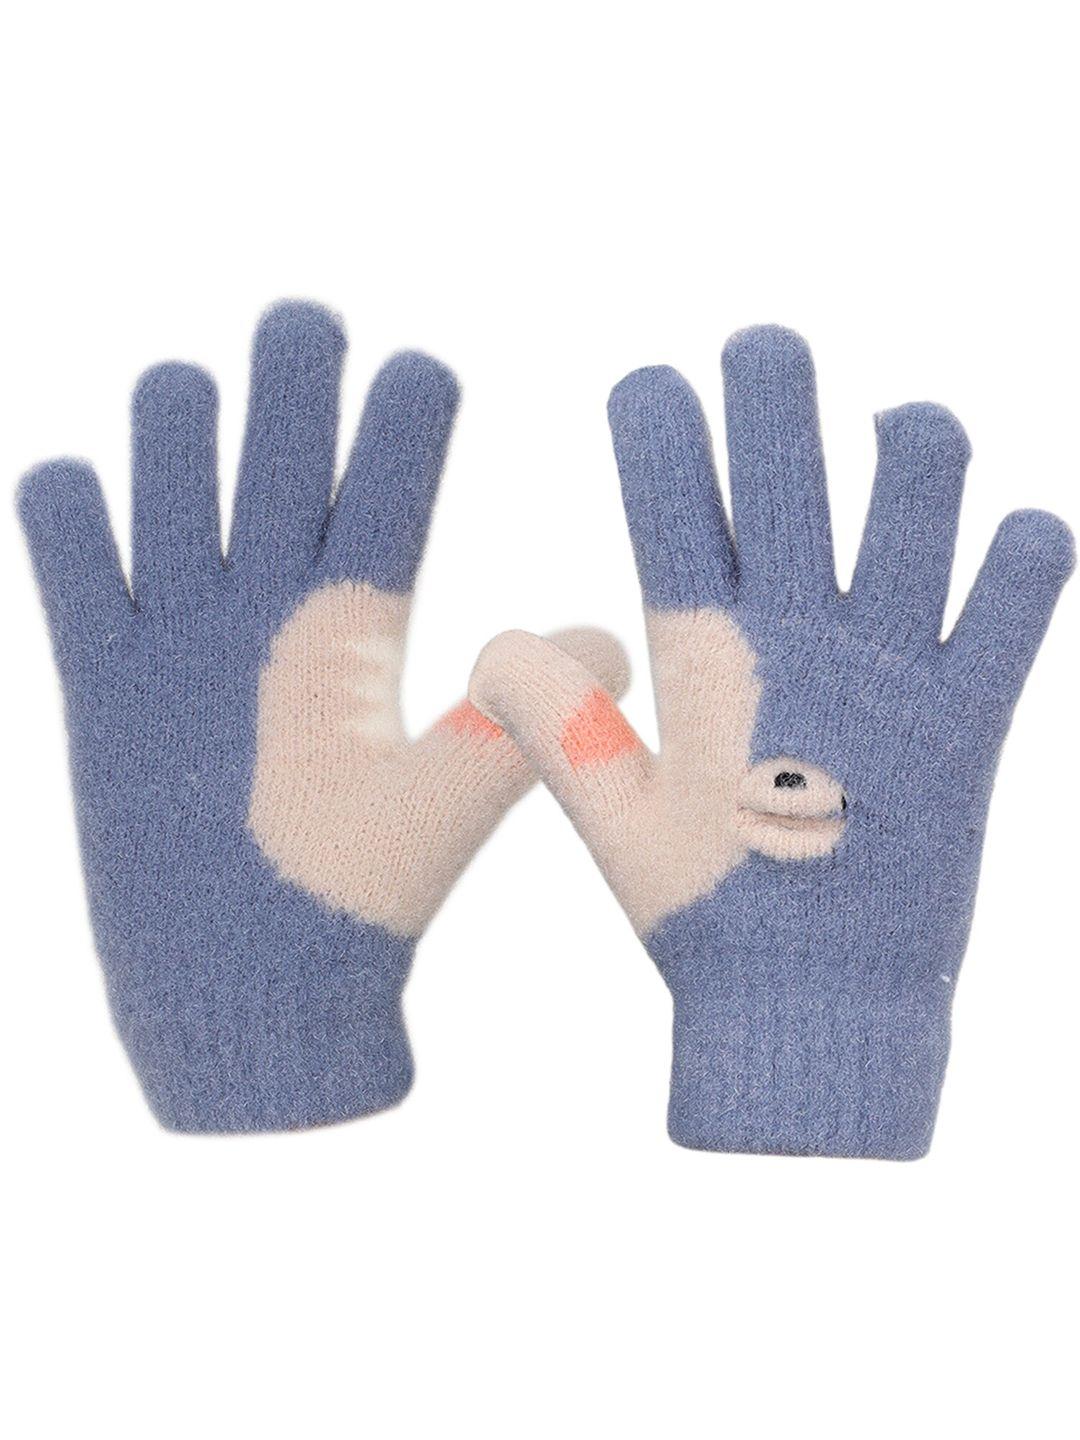 zacharias kids patterned winter gloves